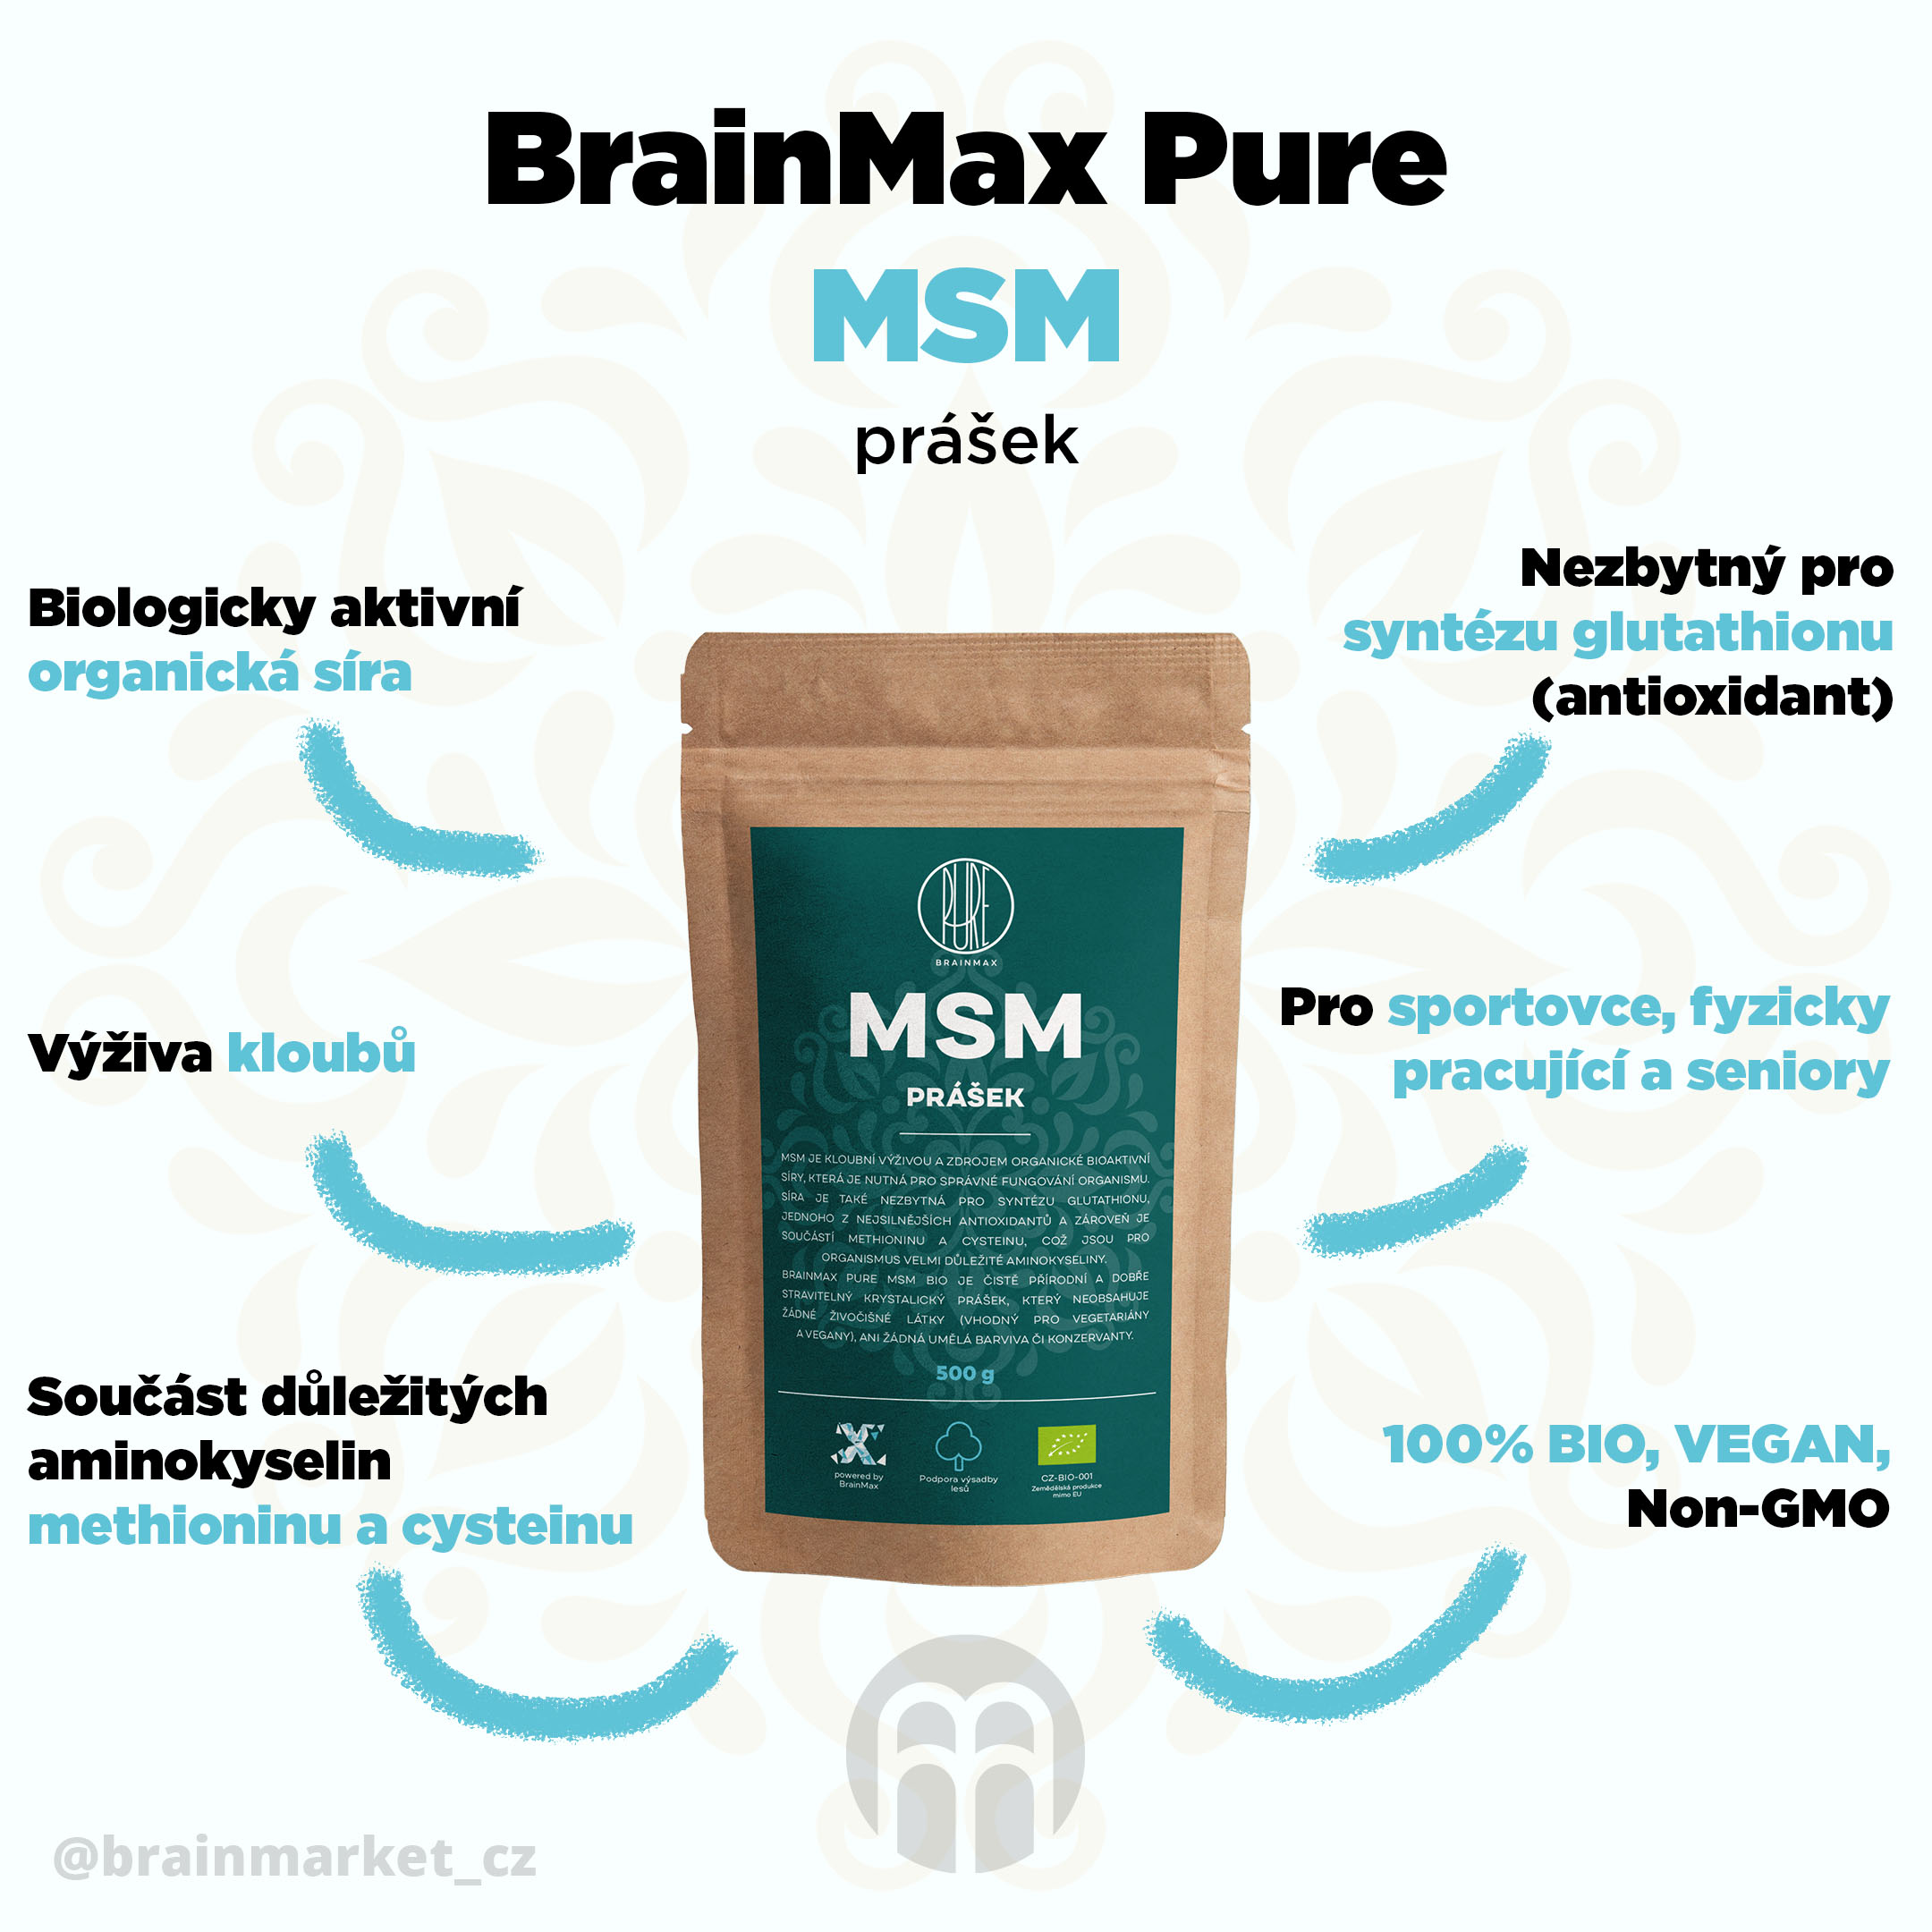 BrainMax Pure MSM BIO prášek, 250 g - BrainMarket.cz